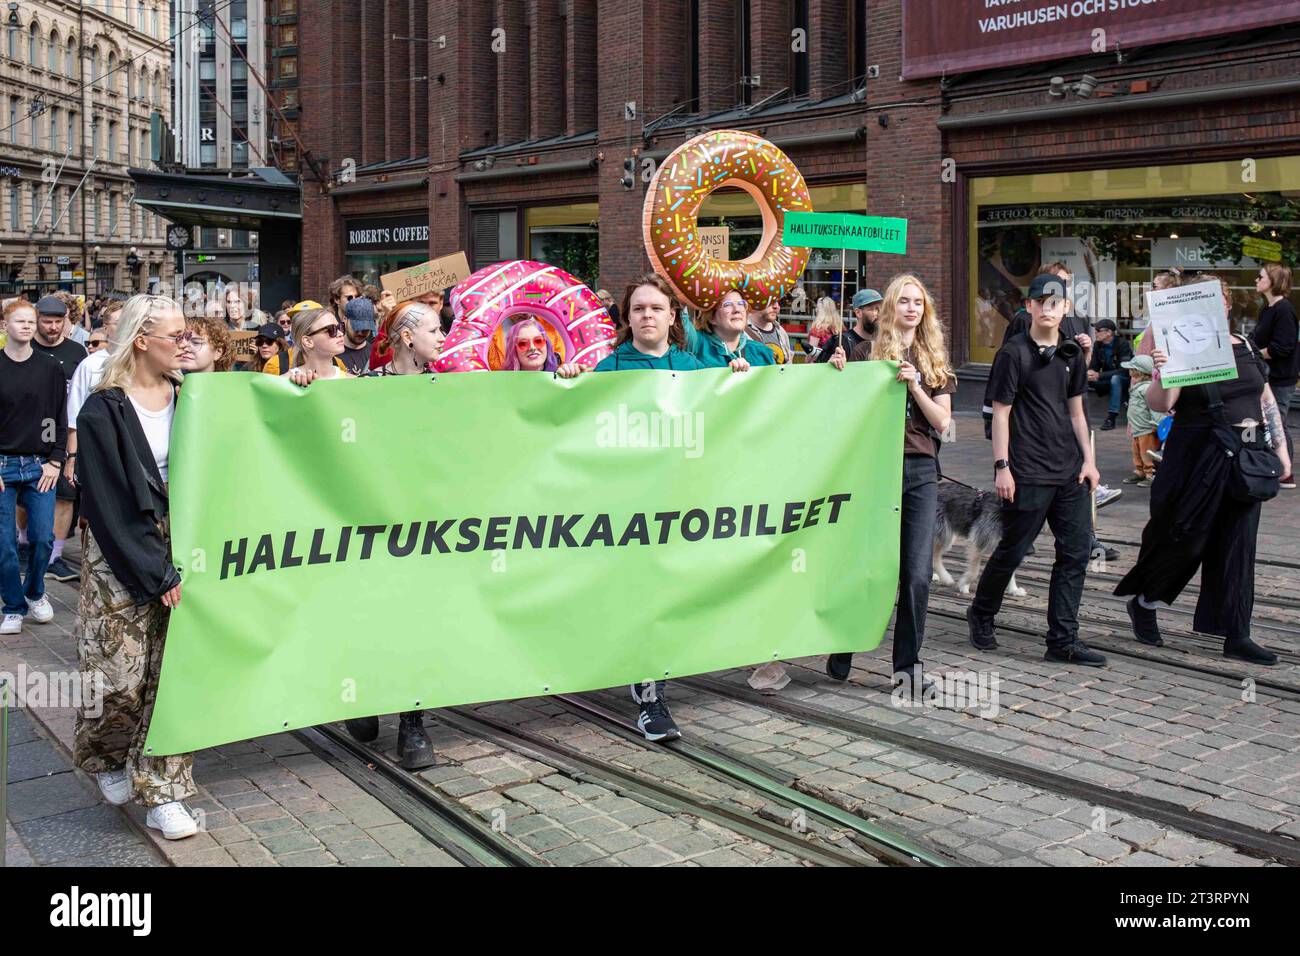 Hallituksenkaatobileet. Der Demonstrant hält ein großes grünes Bannet auf mich, emme Vaikene! Anti-Rassismus-Demonstration in Helsinki, Finnland. Stockfoto